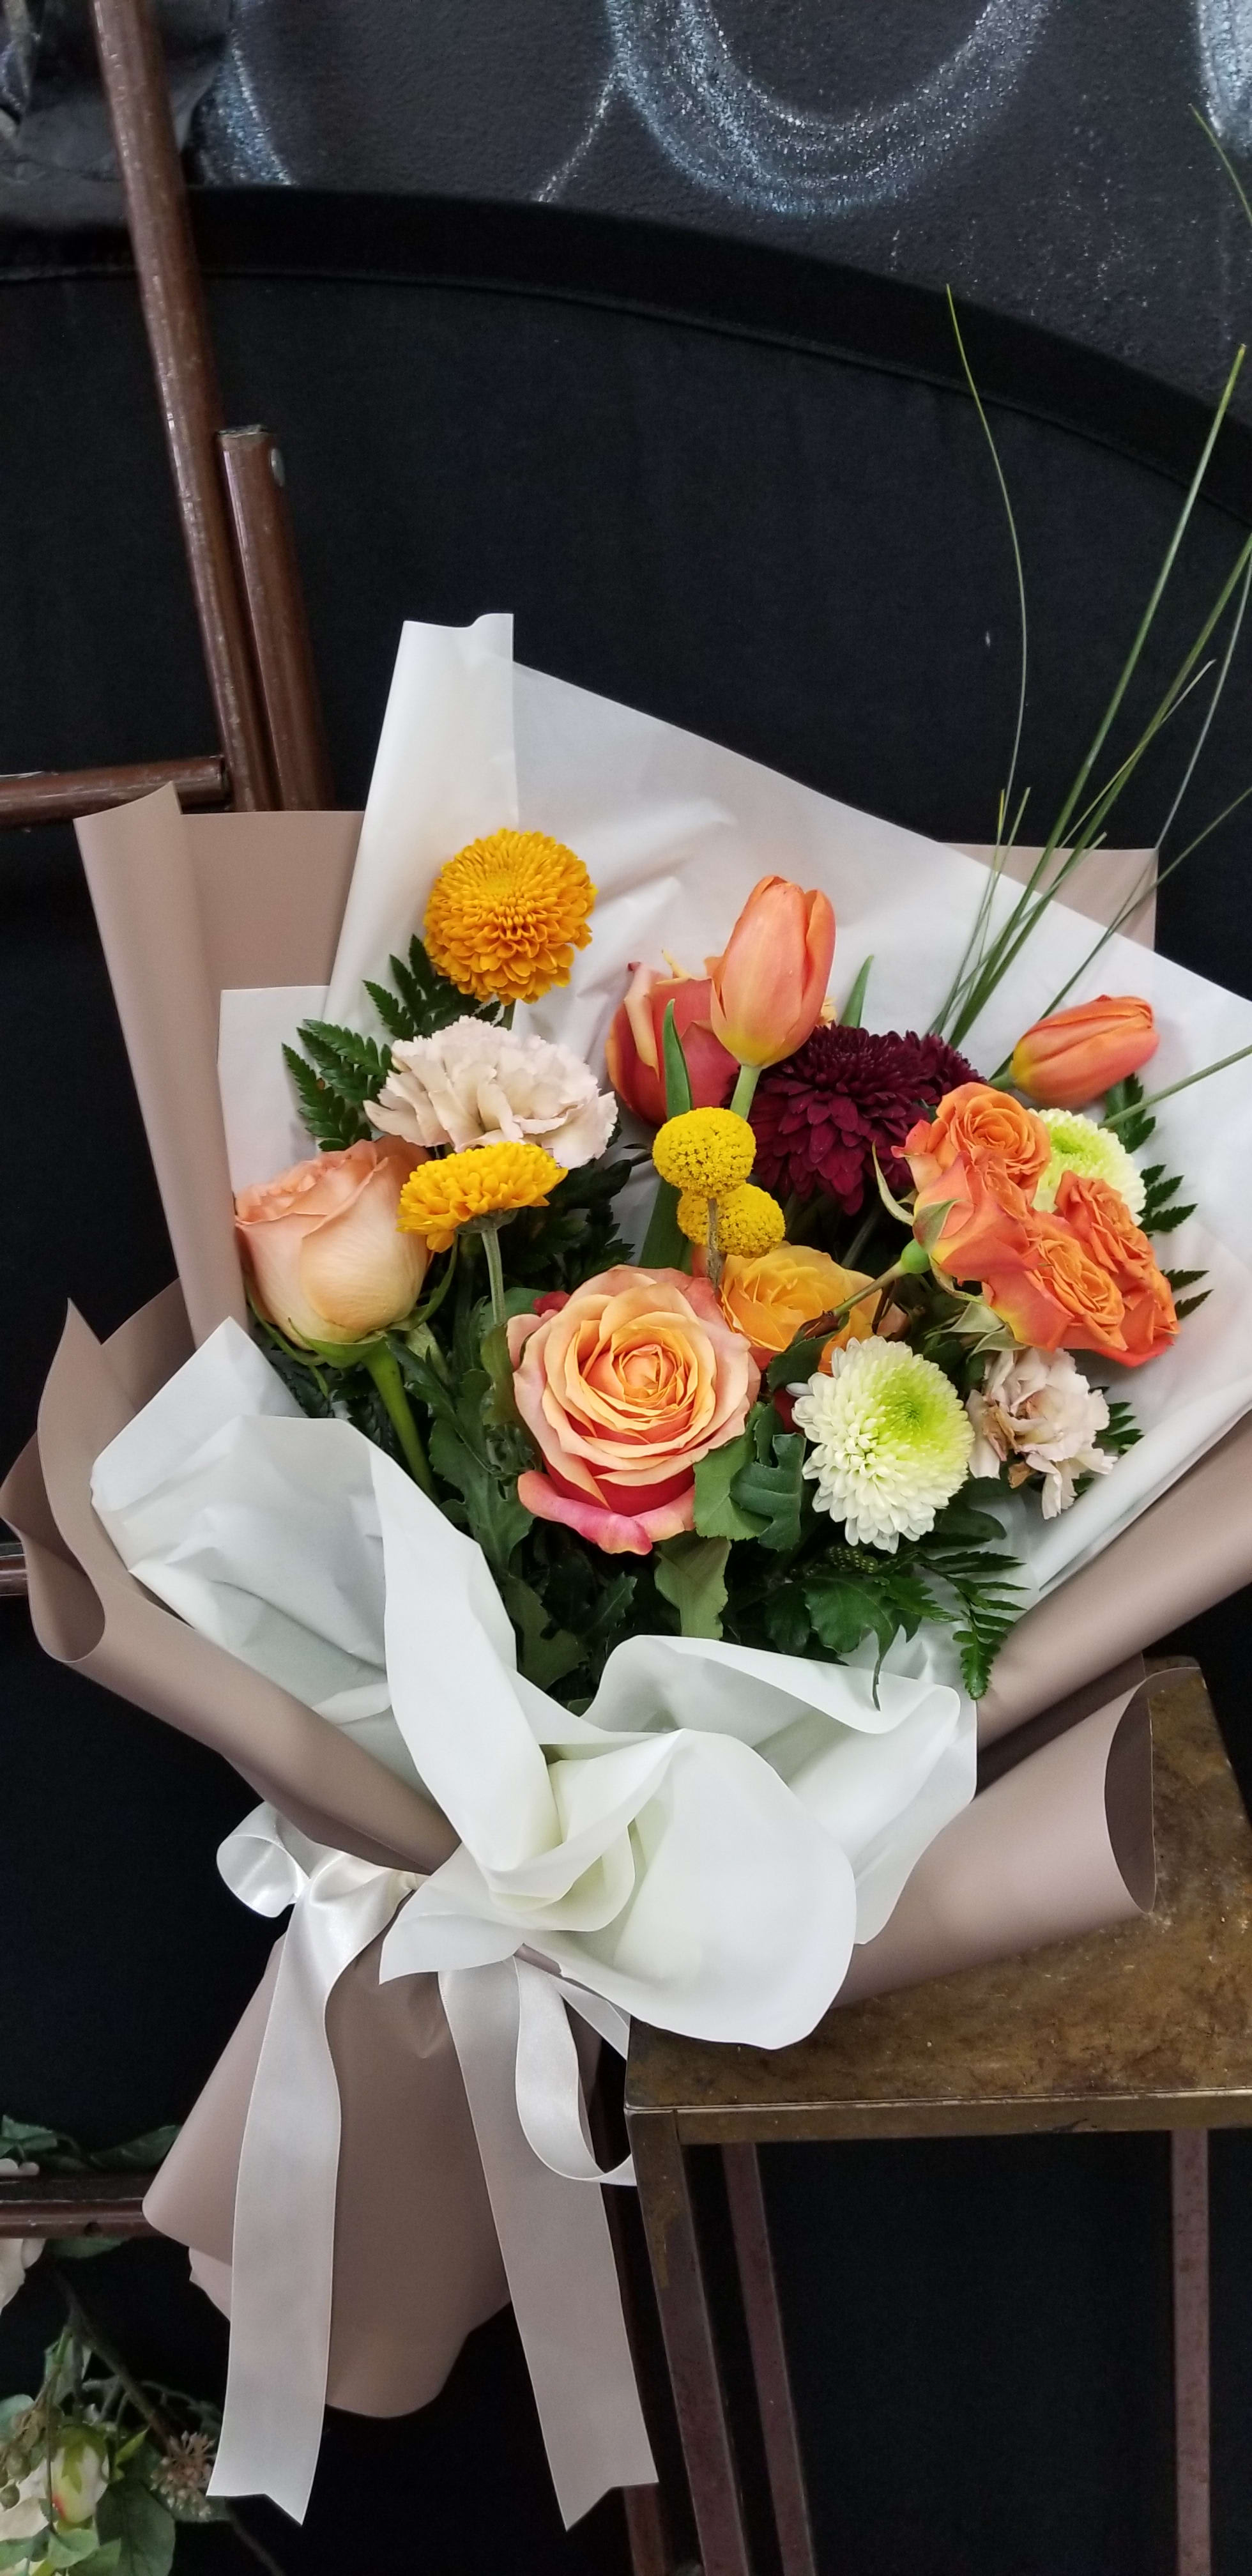 Buy Flower Bouquet Online   Flower Bouquet Delivery Dubai – Flower Station  Dubai   Flower bouquet delivery, Send bouquet, Bouquet